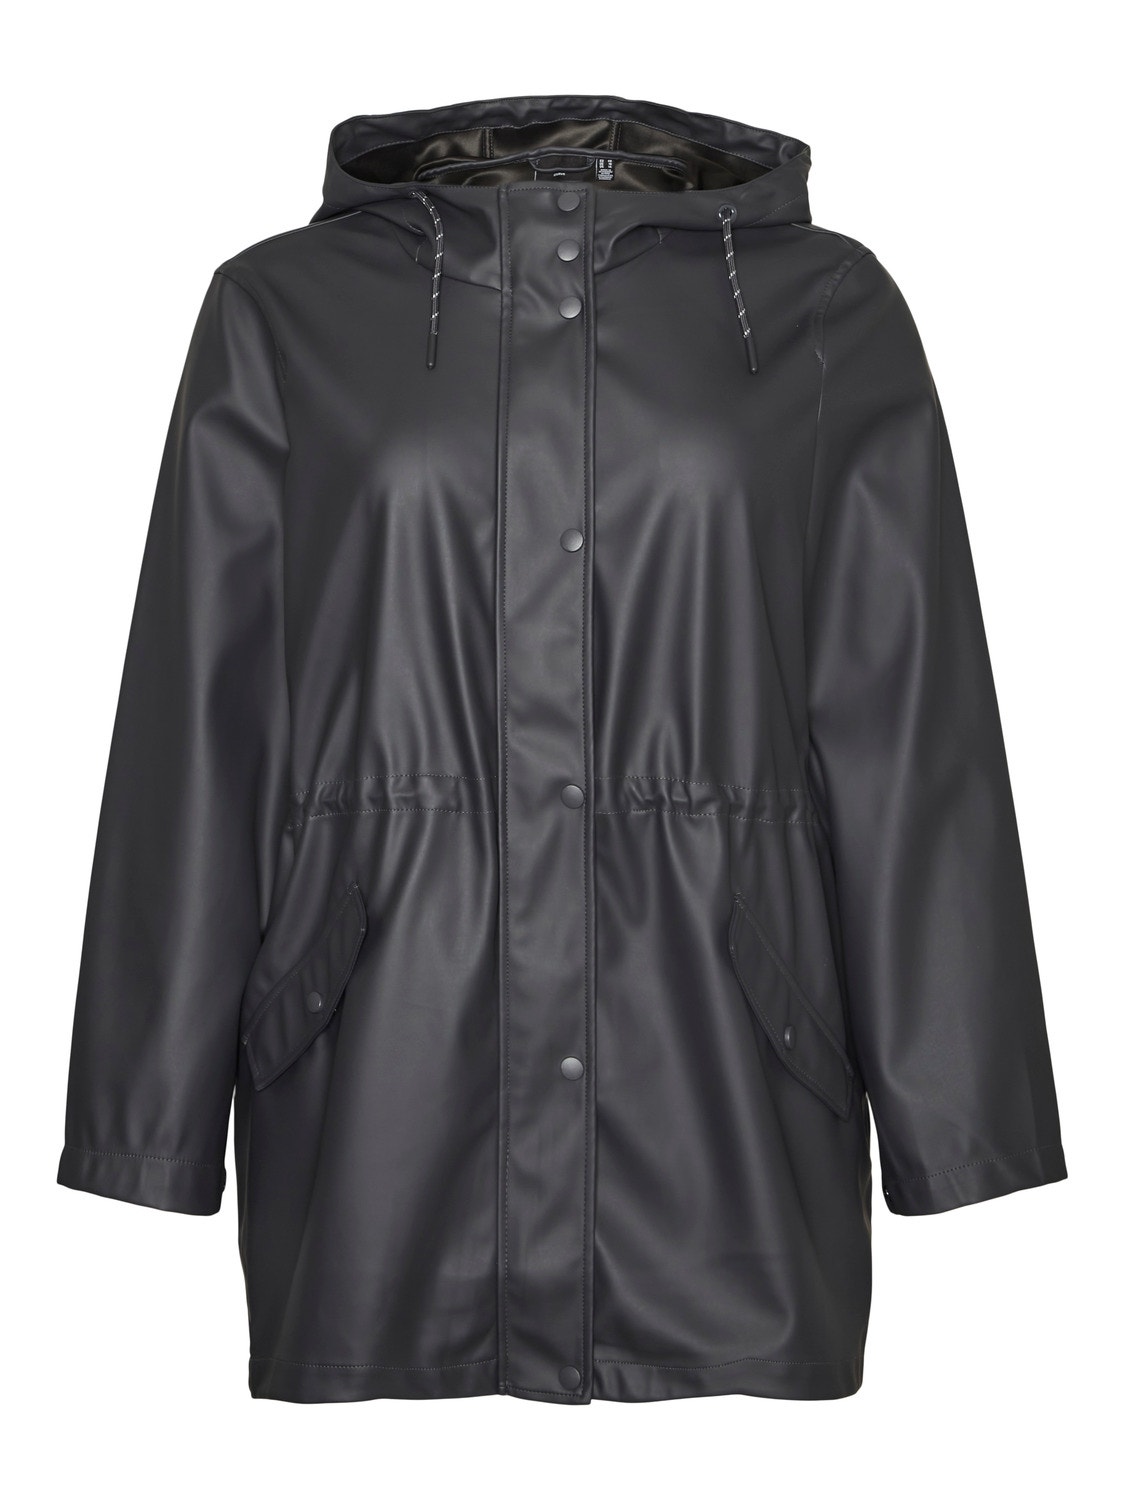 Vero Moda VMMALOU Jacket -Asphalt - 10258070